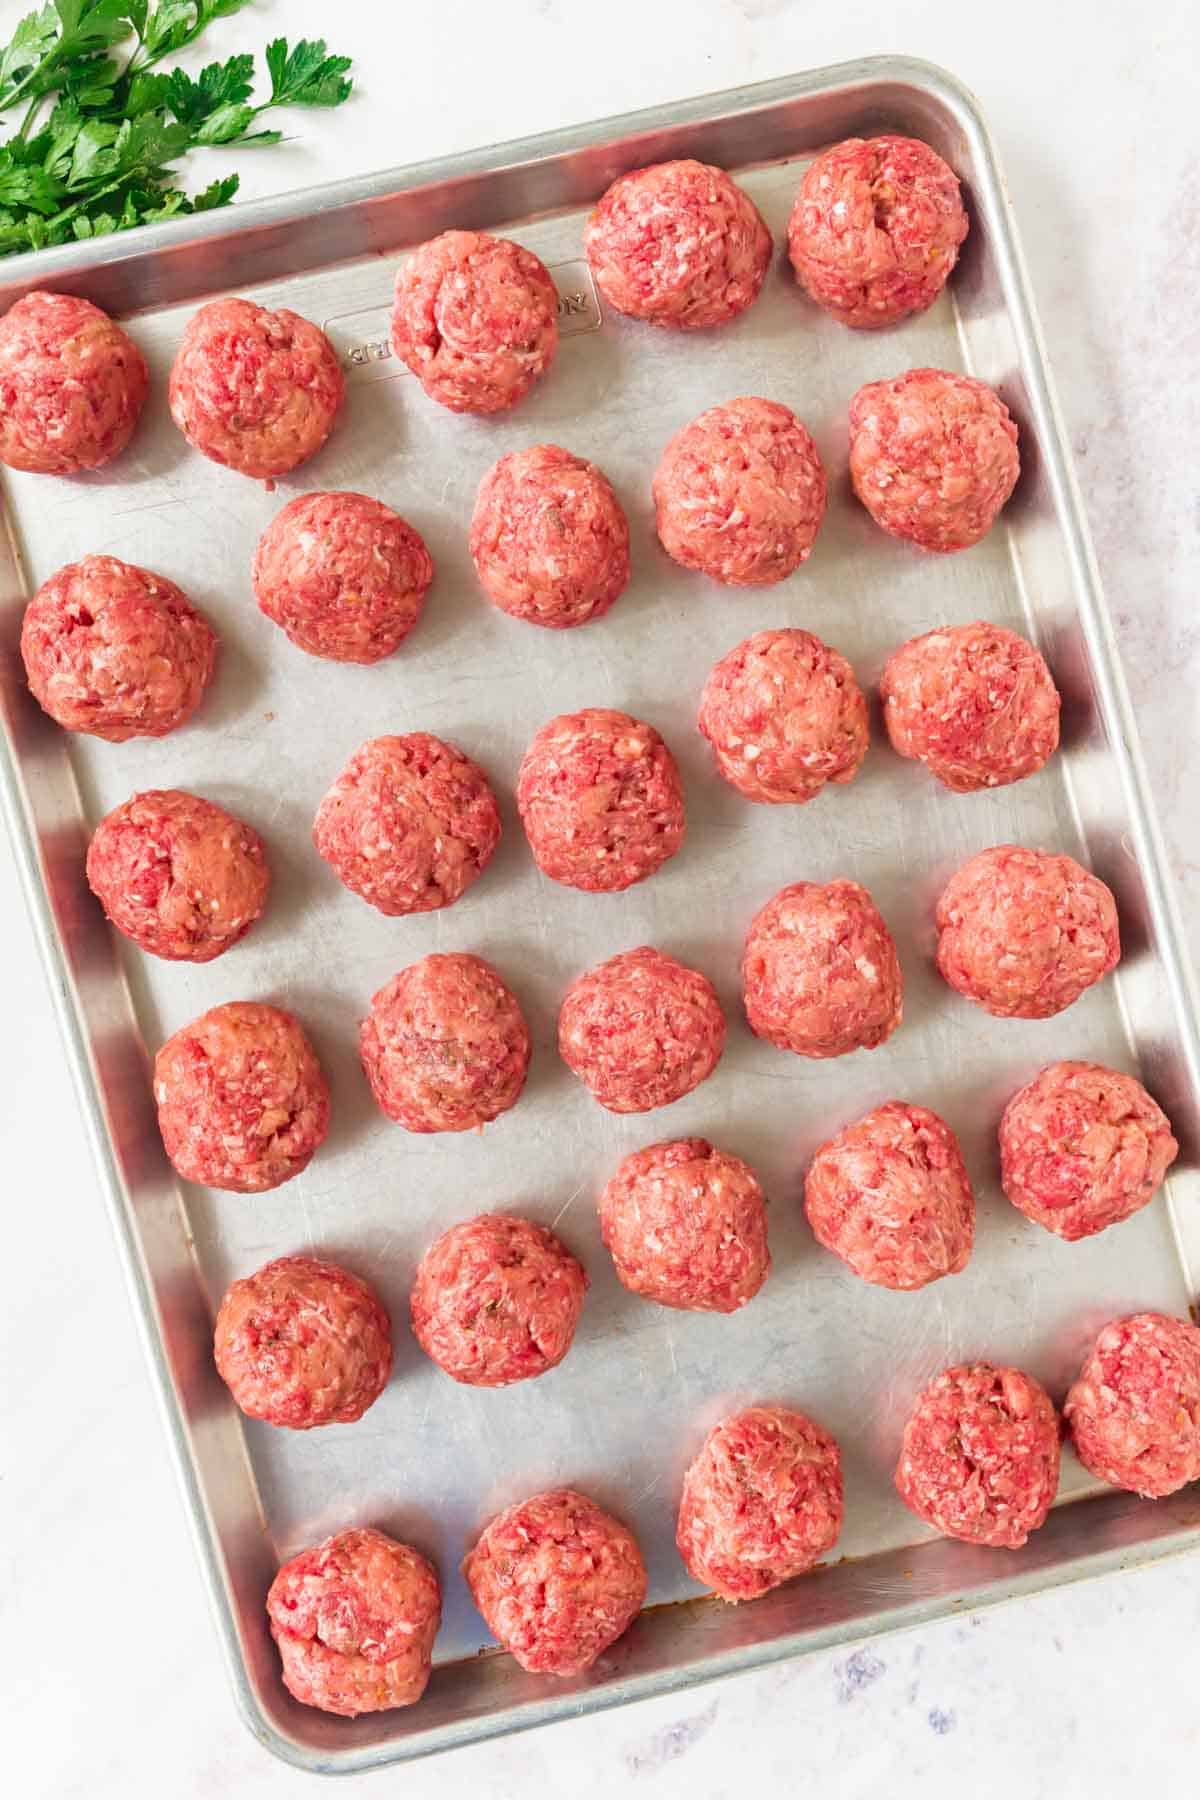 Uncooked Italian meatballs on a lined baking sheet.